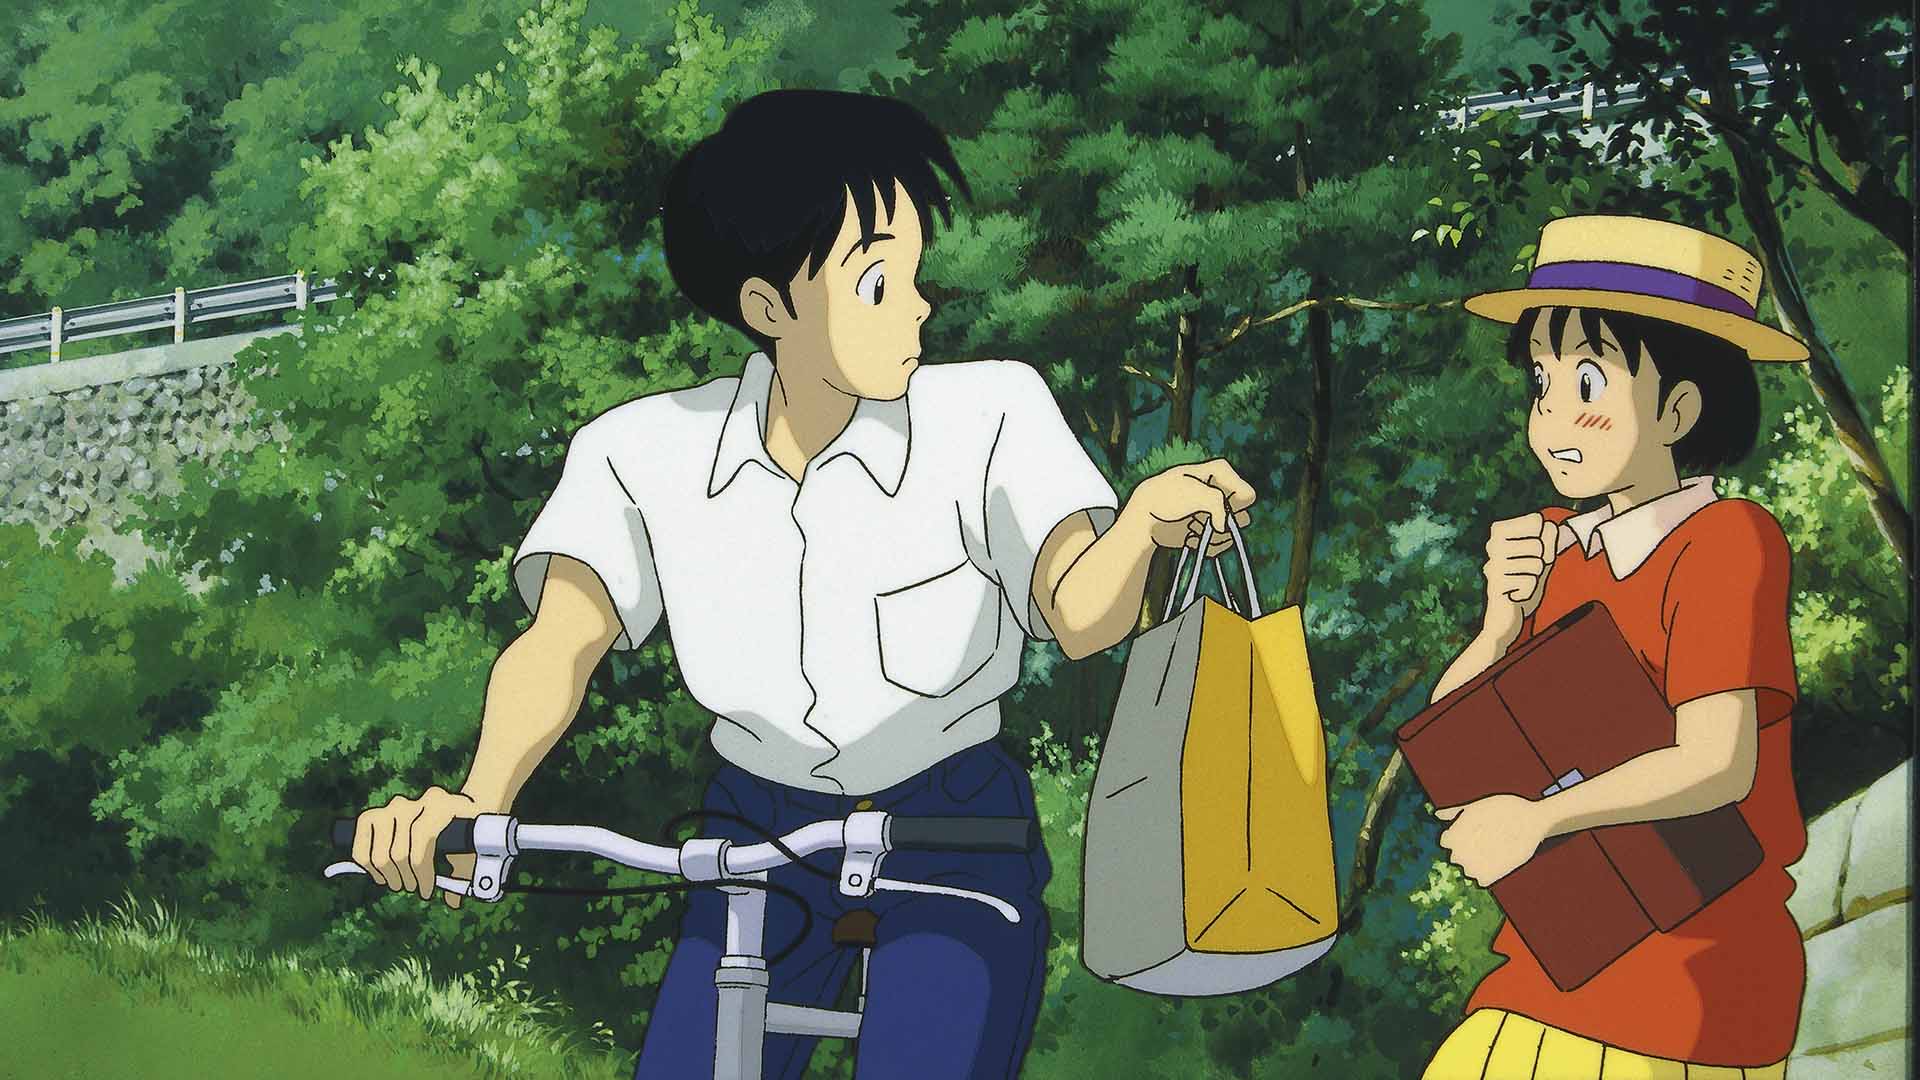 10 Studio Ghibli Movies To Watch On Valentines Day